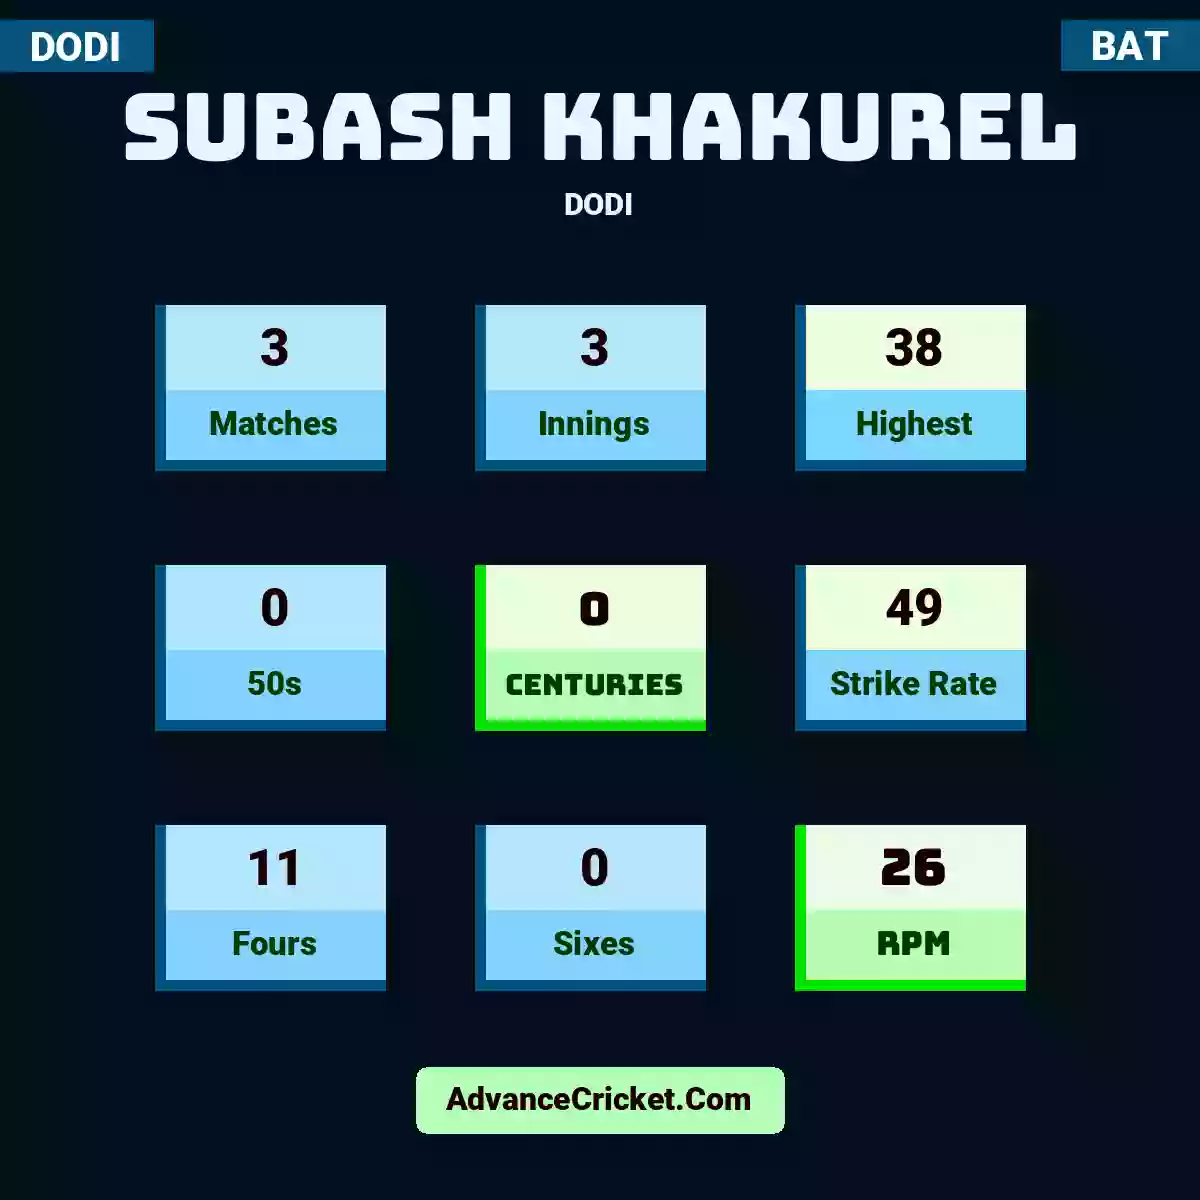 Subash Khakurel DODI , Subash Khakurel played 3 matches, scored 38 runs as highest, 0 half-centuries, and 0 centuries, with a strike rate of 49. S.Khakurel hit 11 fours and 0 sixes, with an RPM of 26.